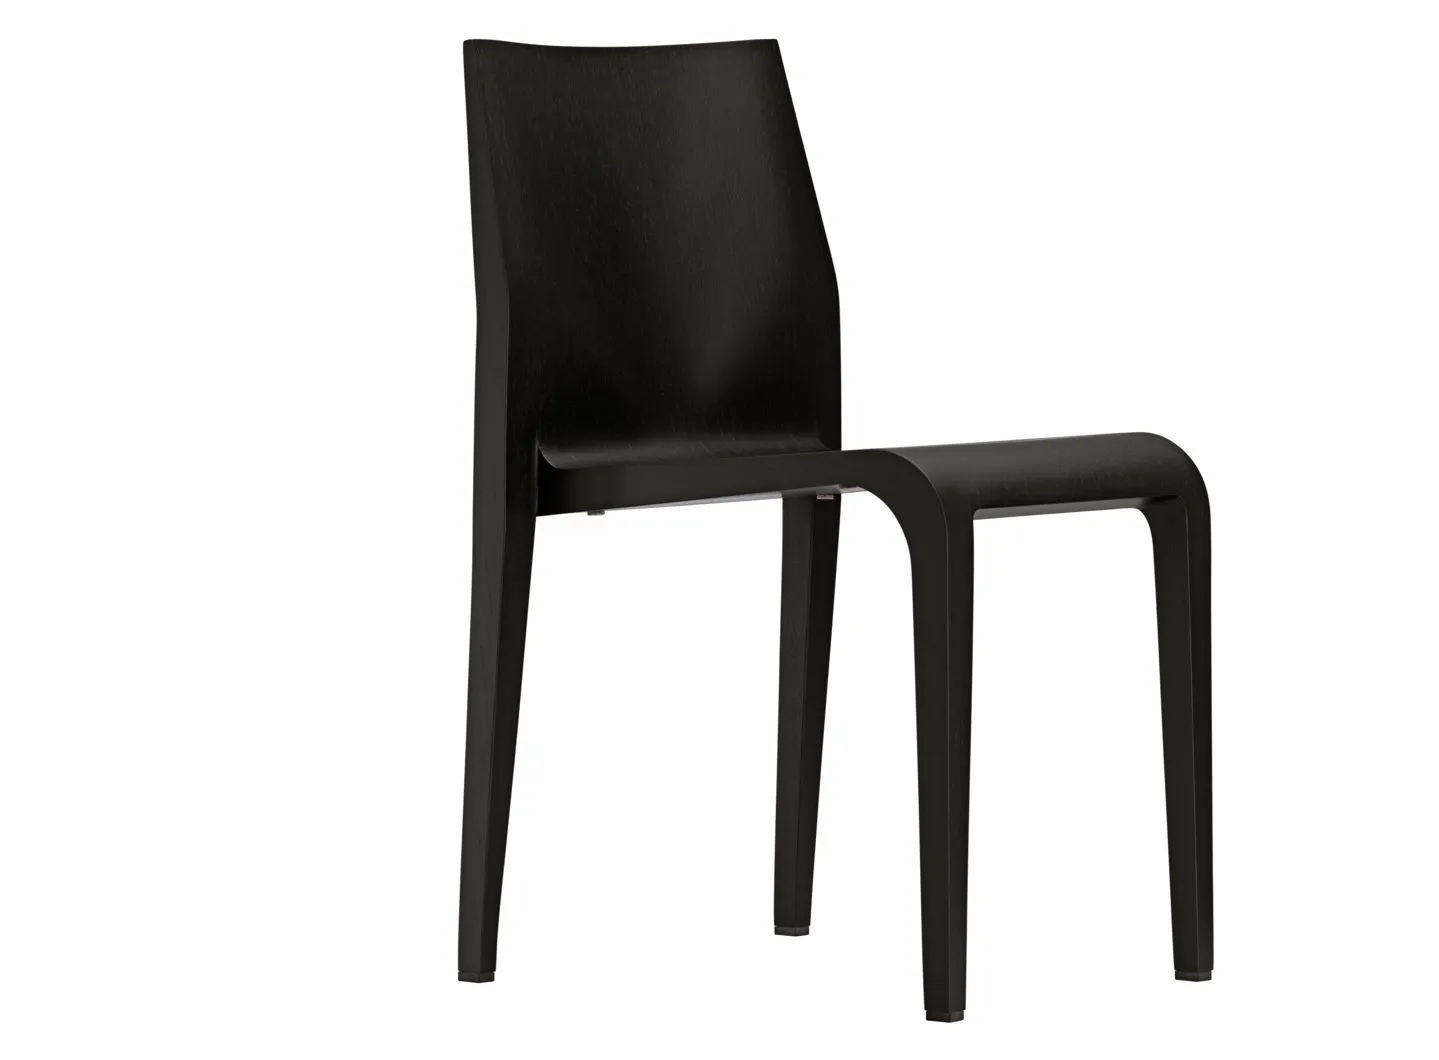 Laleggera chair, designed by Riccardo Blumer